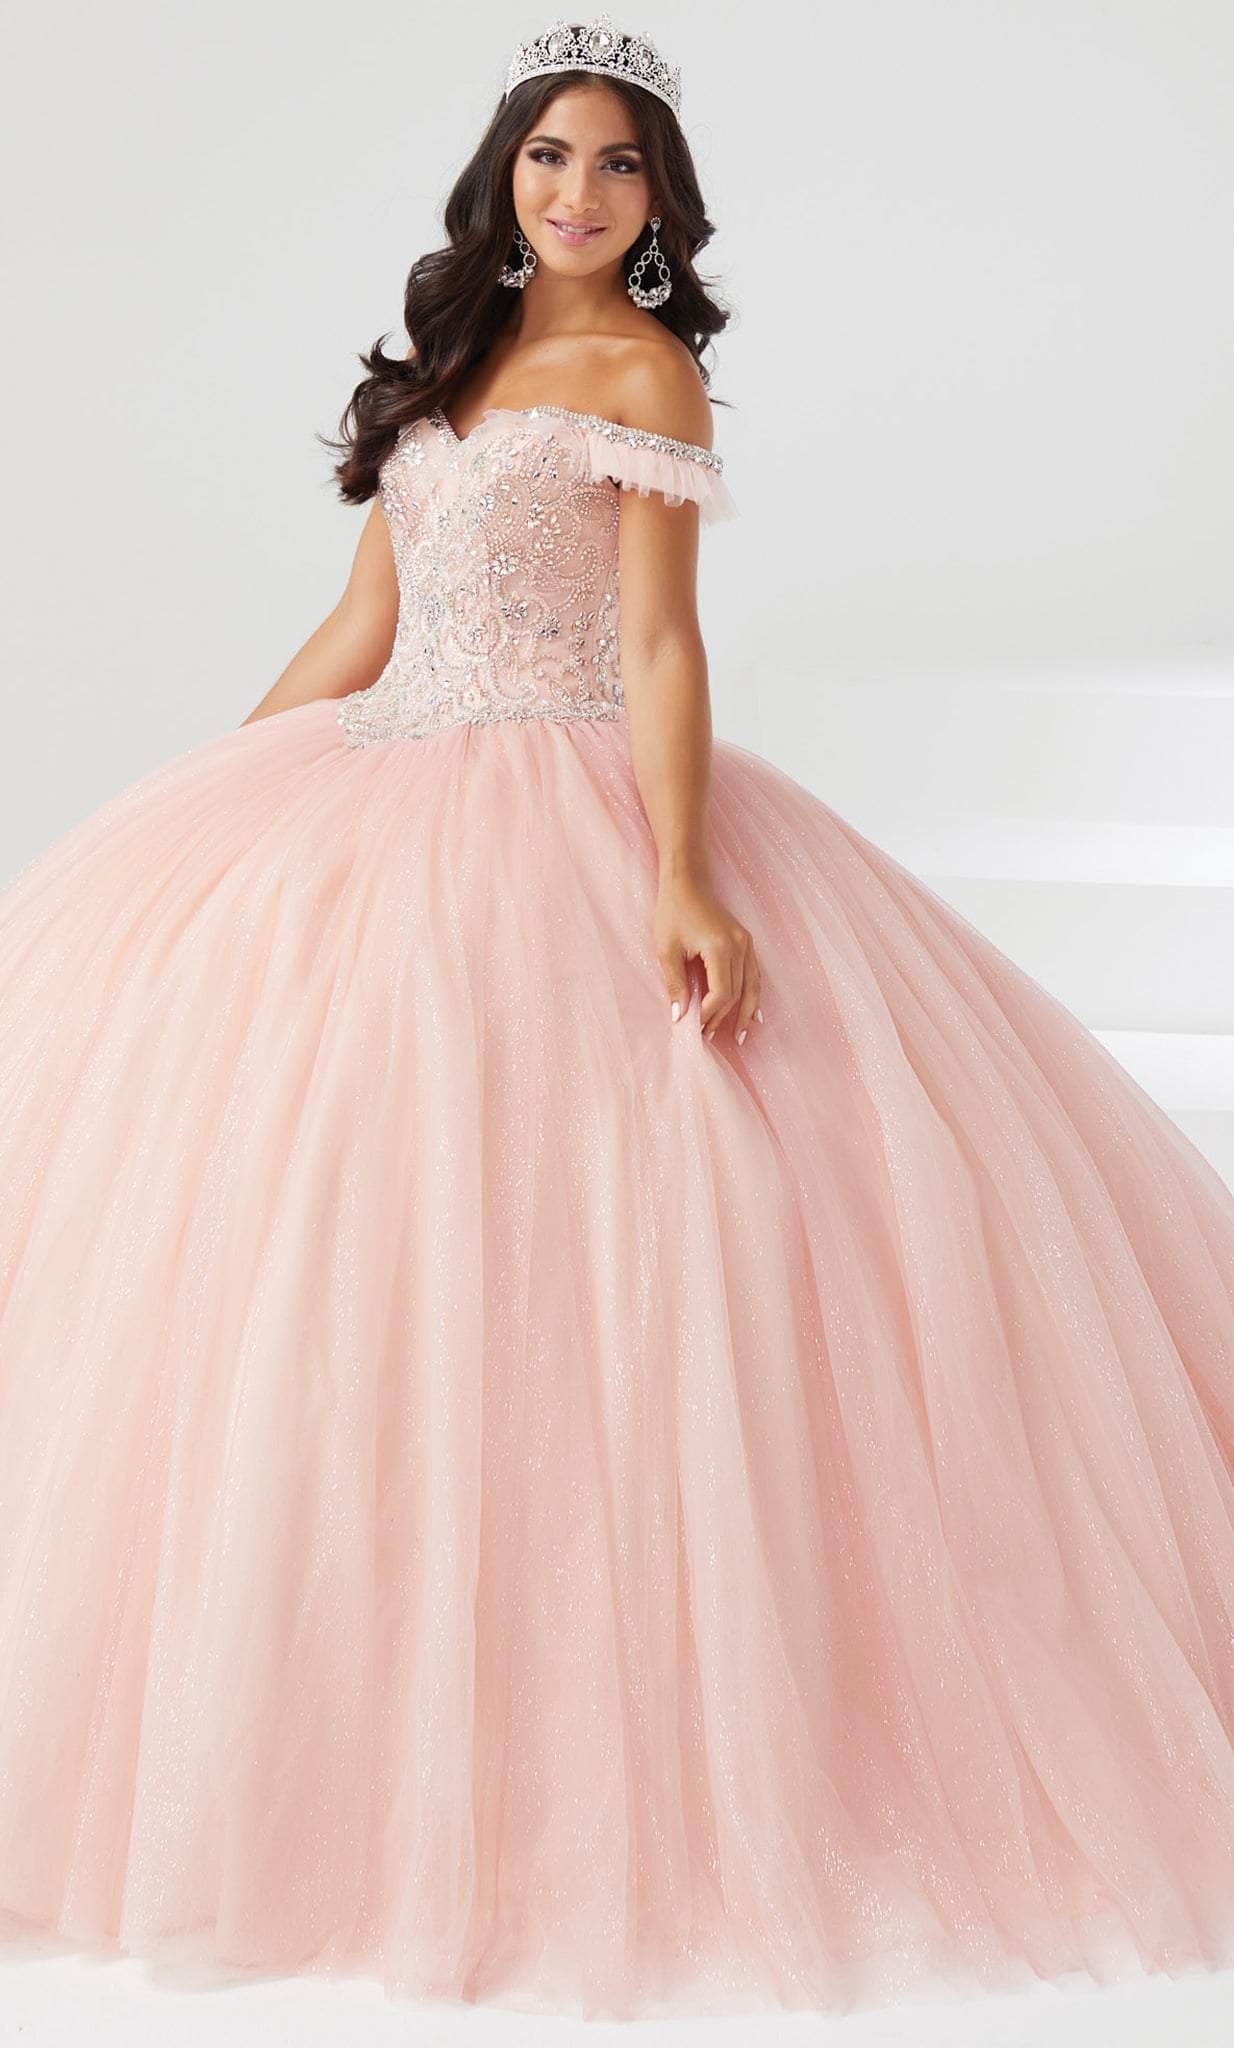 Fiesta Gowns 56460 - Tulle Sweet Glittered Ballgown
